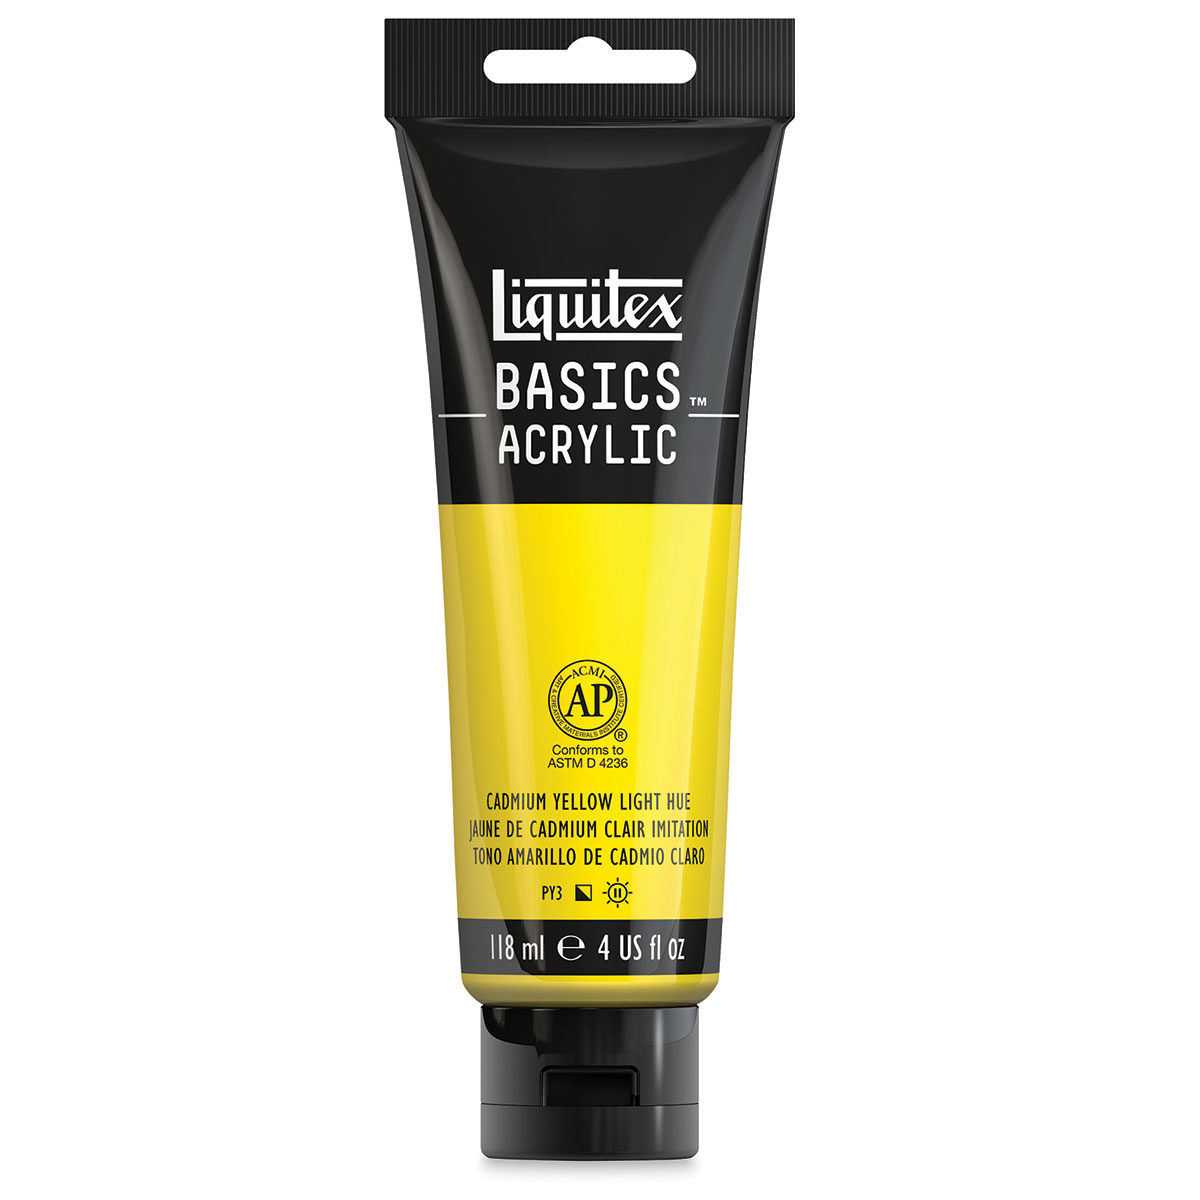 Liquitex BASICS Acrylic Paint, 118ml (4-oz) Tube, Cadmium Yellow Light Hue